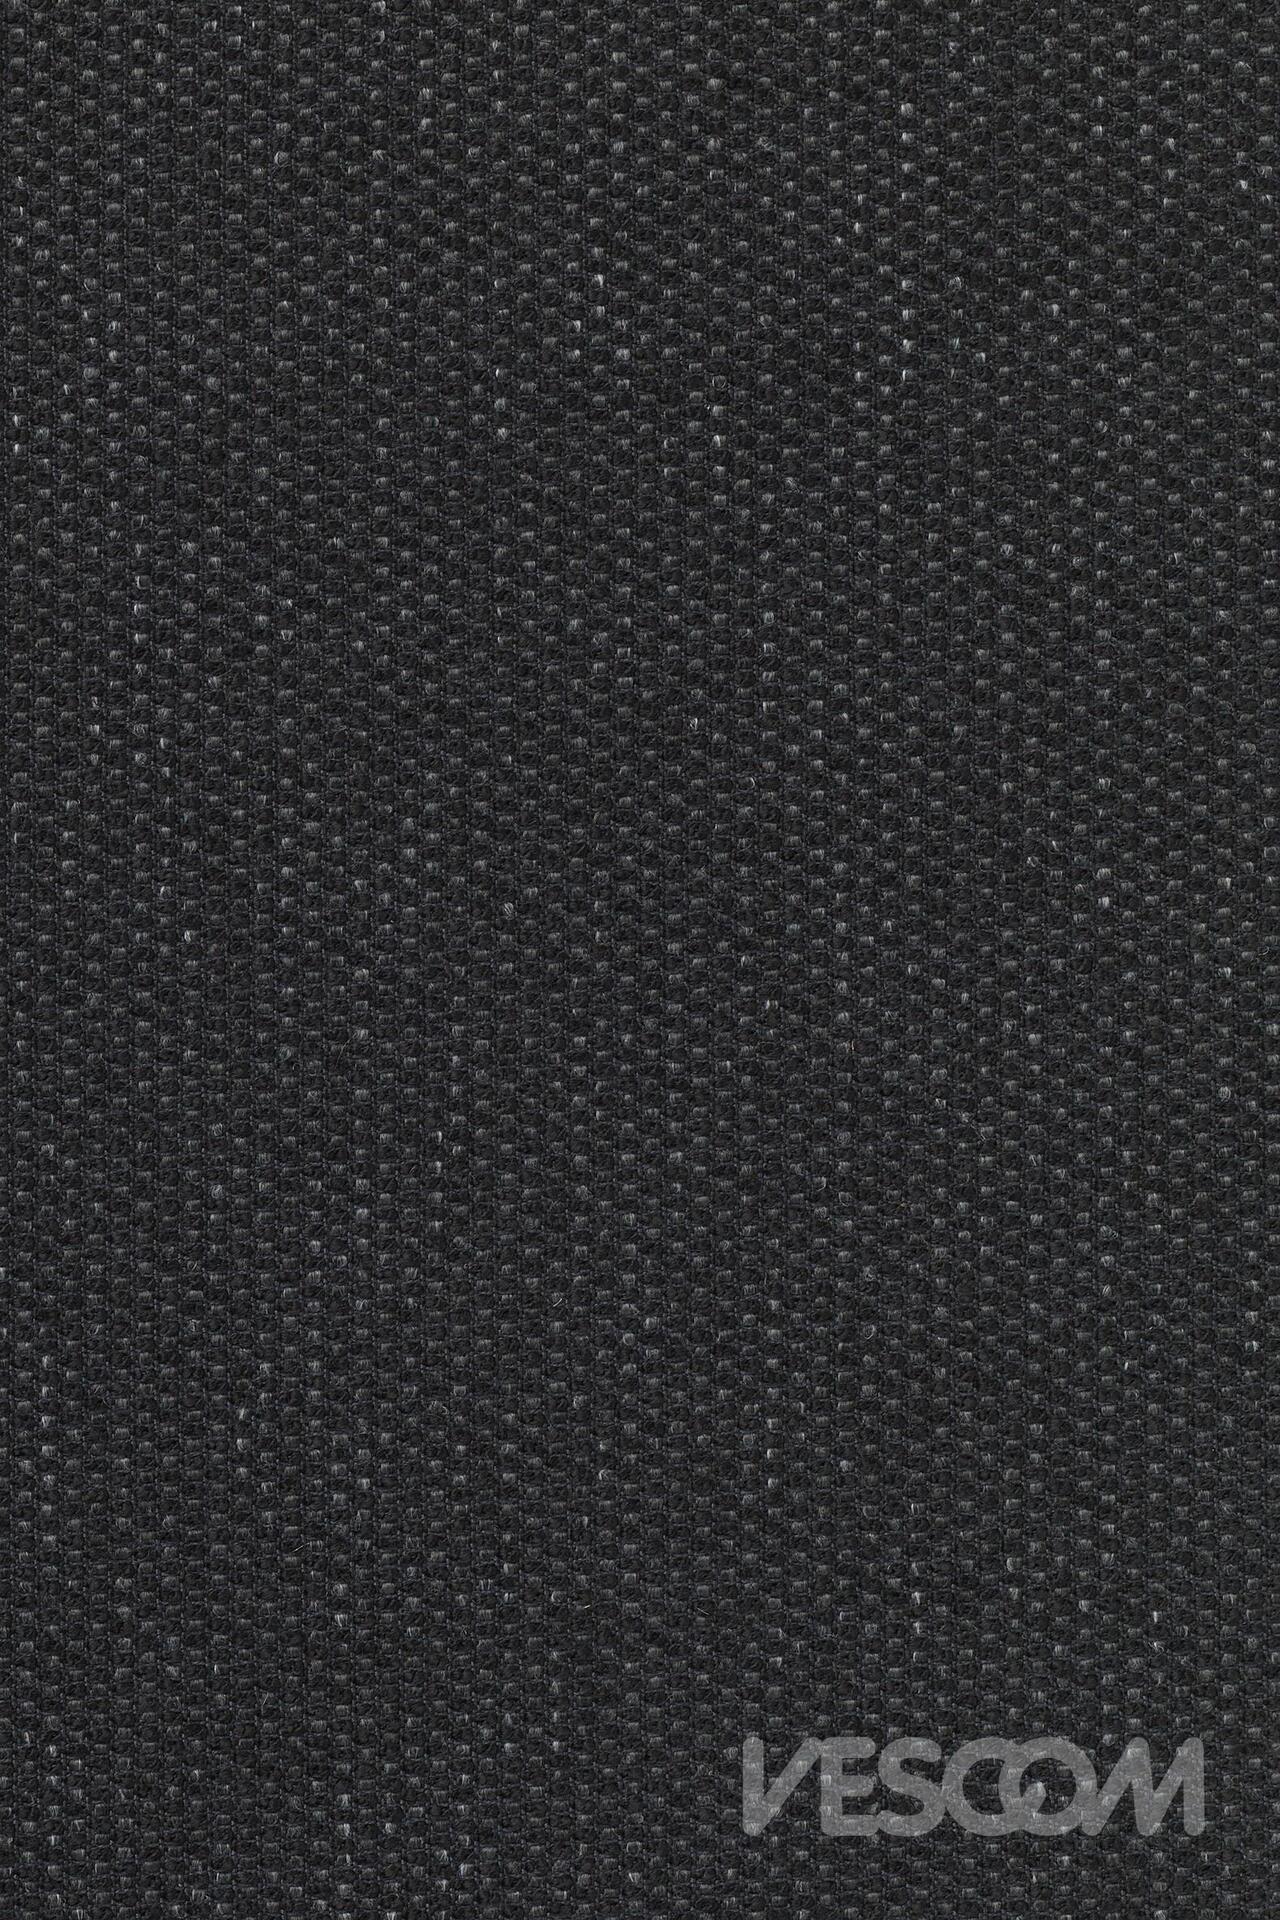 Vescom-Burton-Upholstery-Fabric-7056.11.jpg